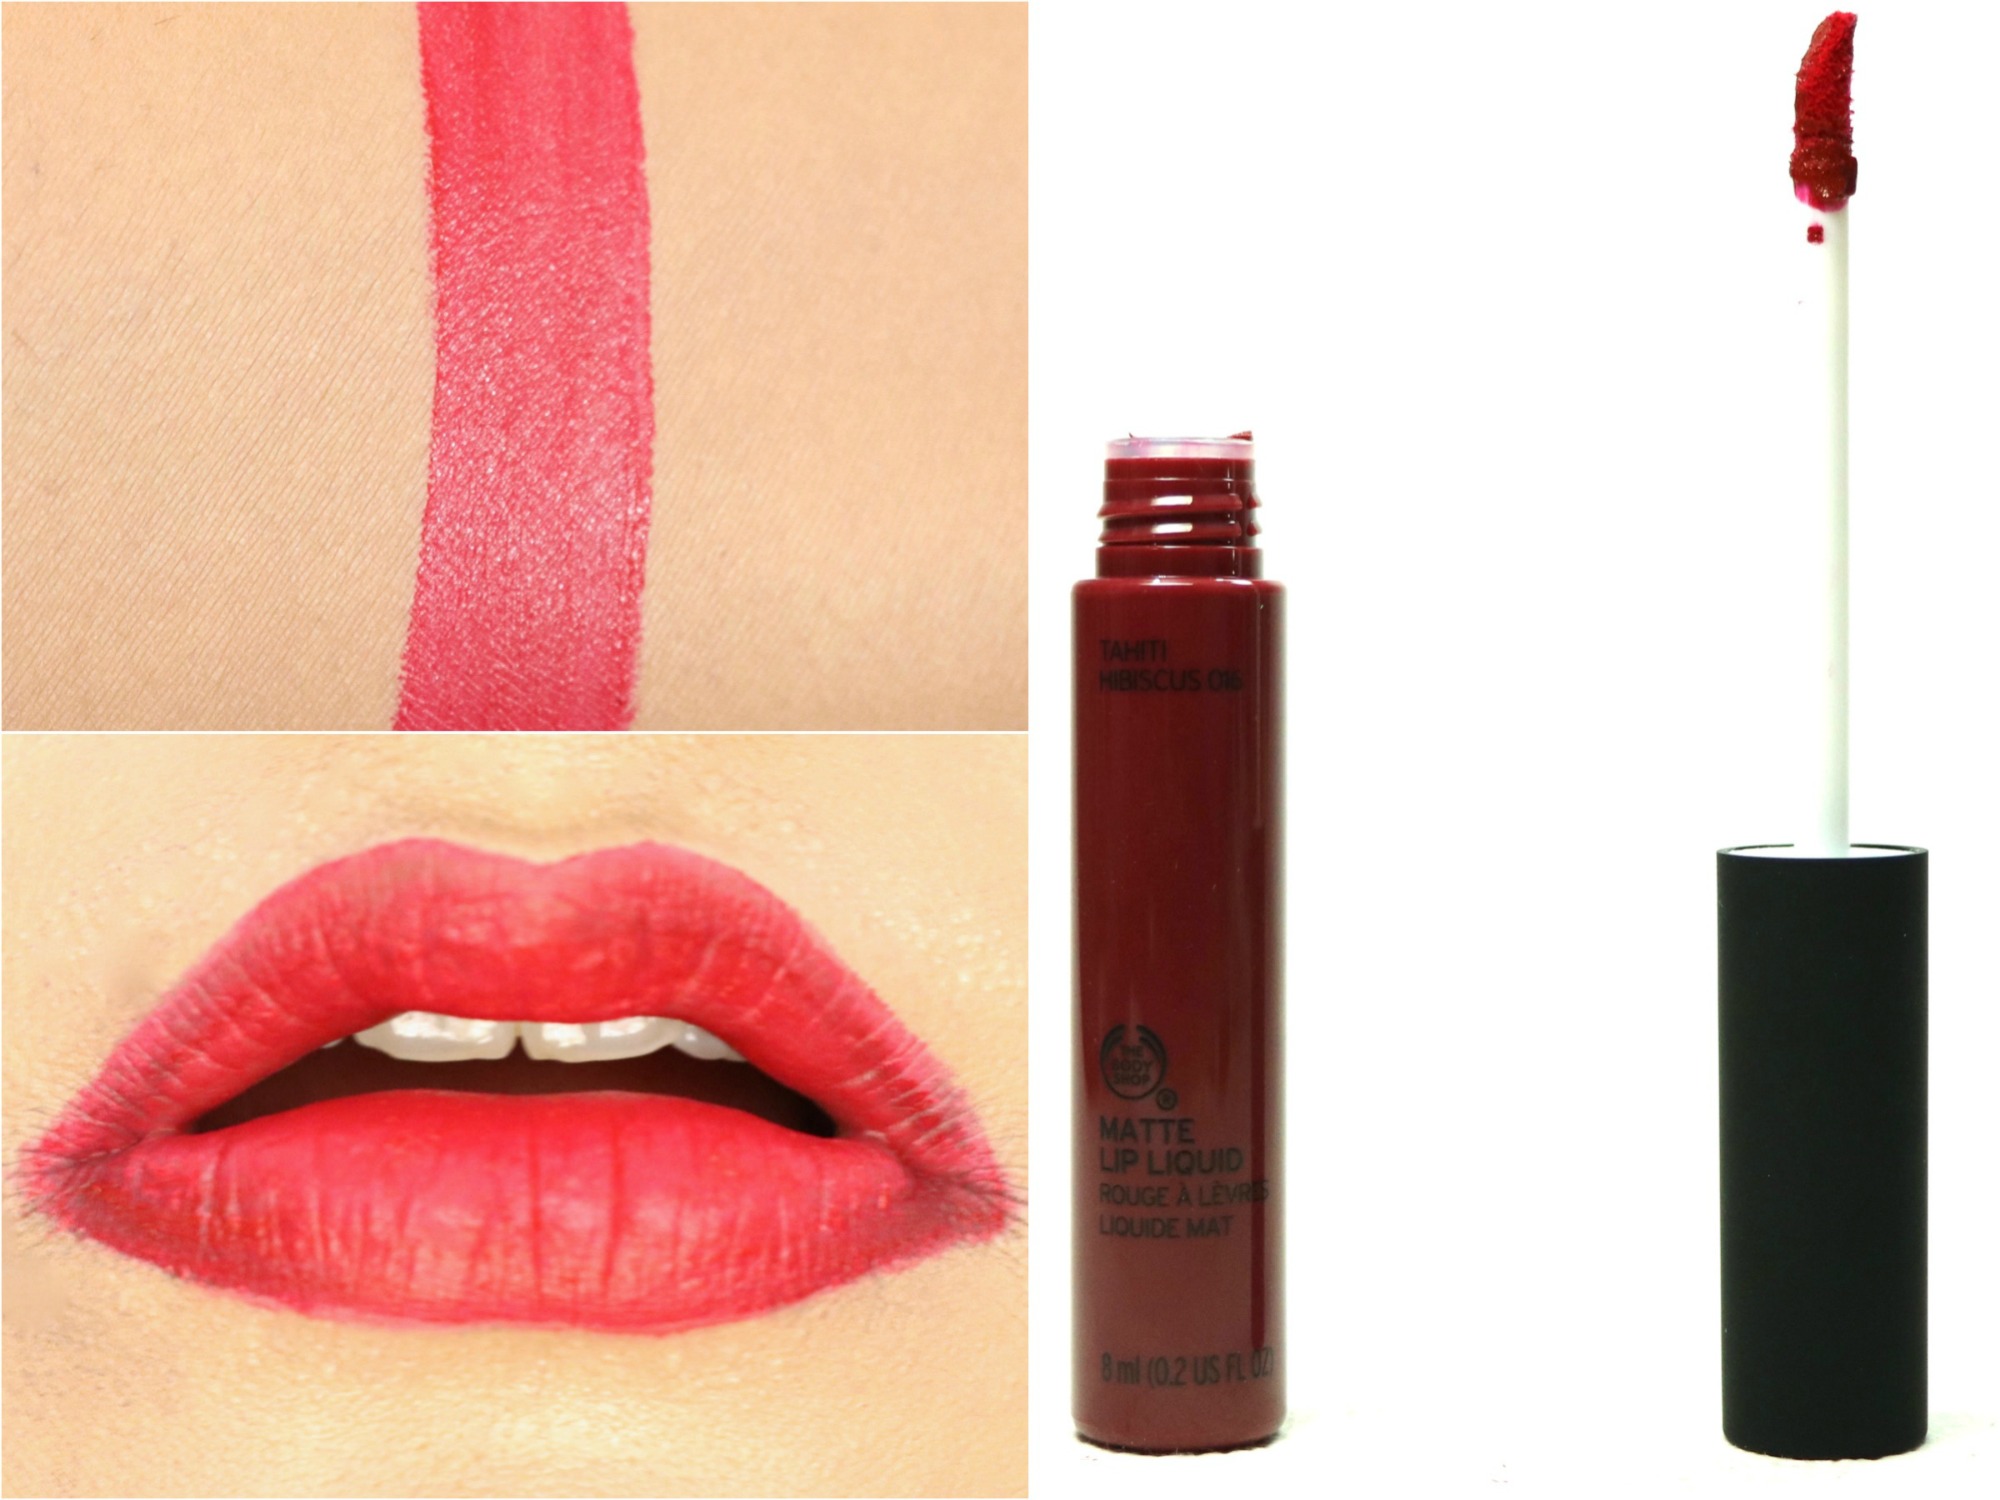 Waakzaam extract Spuug uit The Body Shop Matte Lip Liquid Lipstick Tahiti Hibiscus Review, Swatches